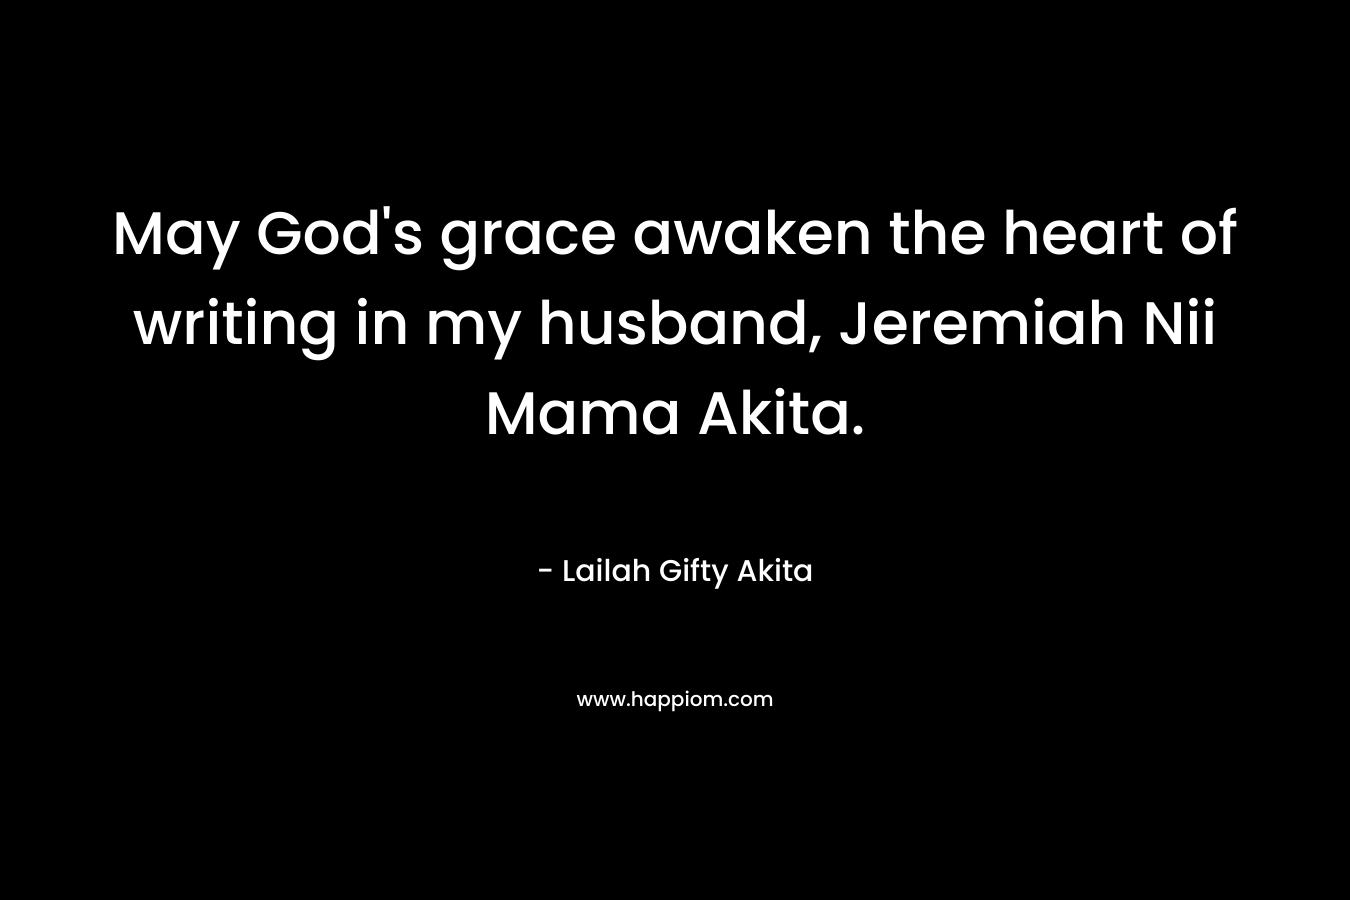 May God's grace awaken the heart of writing in my husband, Jeremiah Nii Mama Akita.